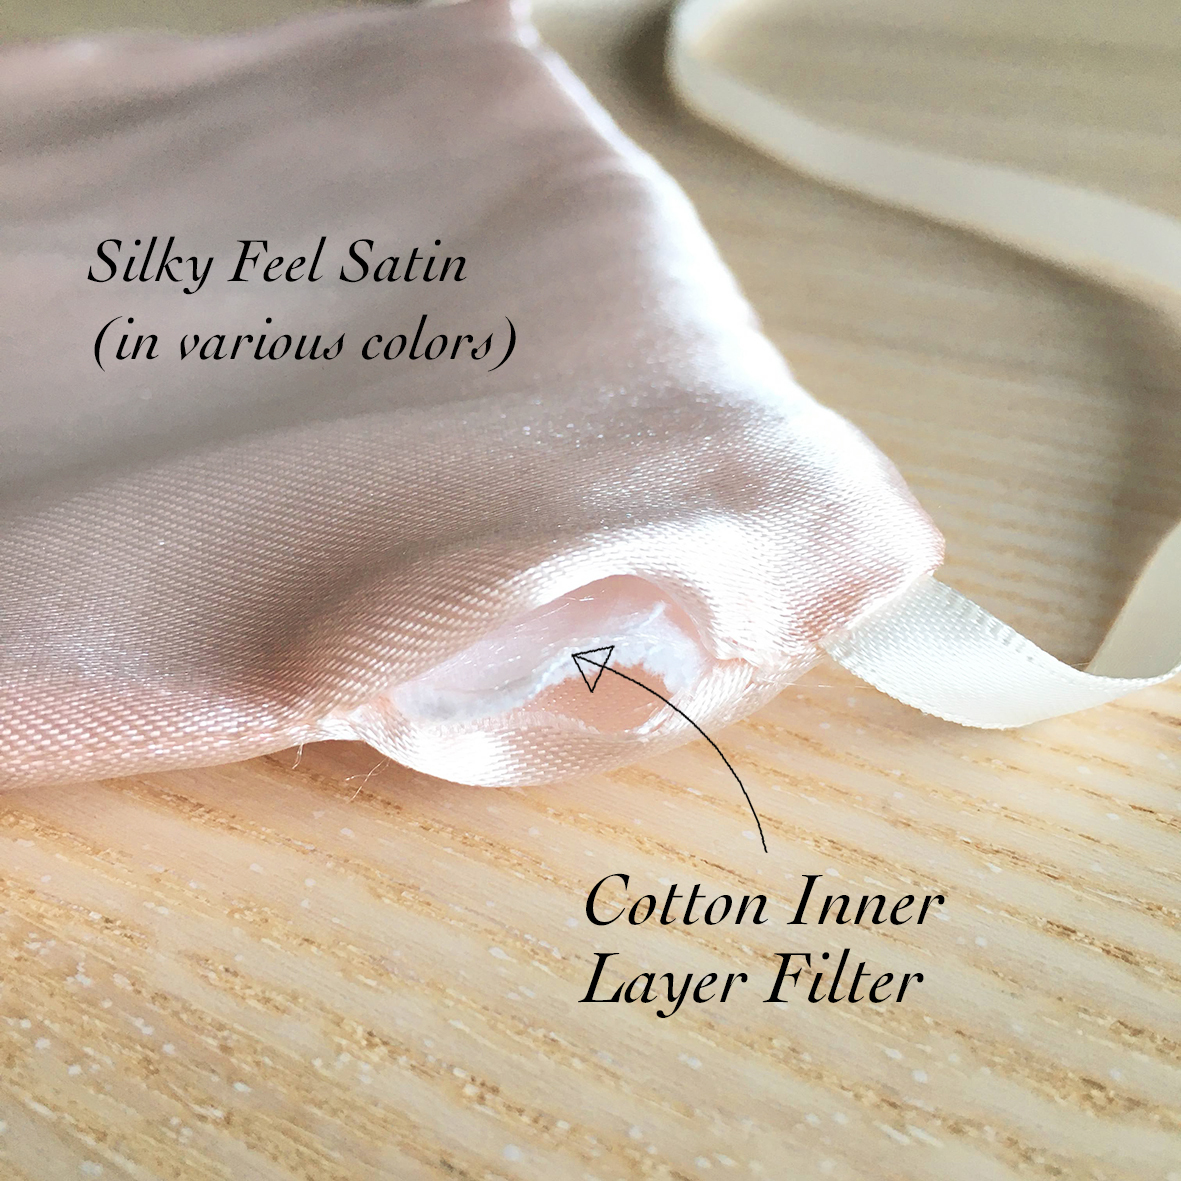 facemask cotton inner layer filter 02.jpg